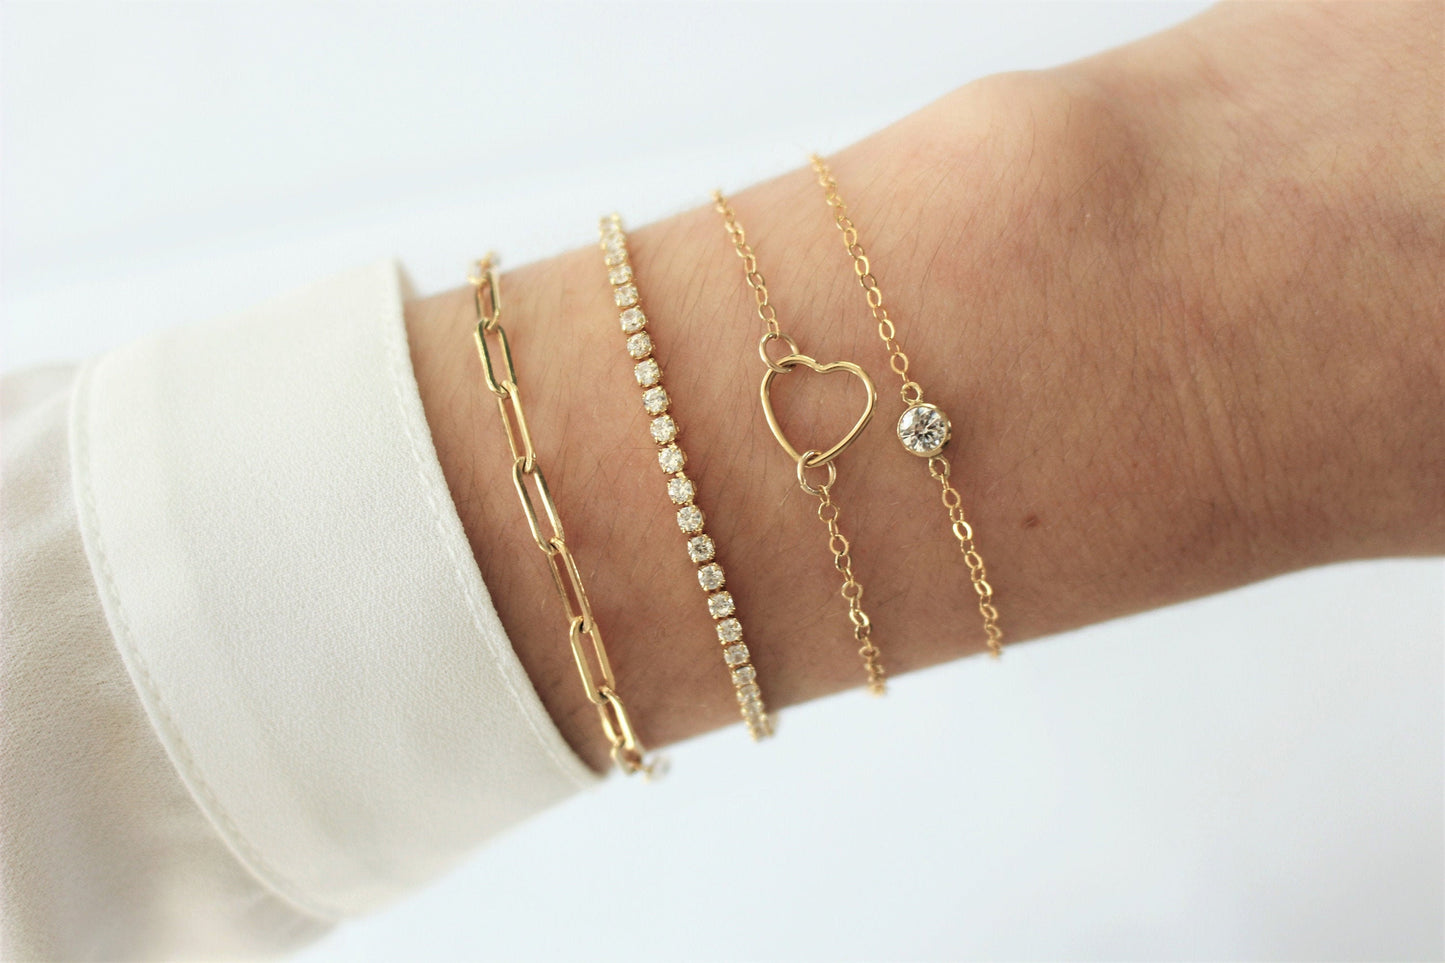 14k Gold Filled Bracelet For Women ∙ Clear Zircon Connector∙ 14k Gold Bracelet Chain ∙ Delicate Minimalist Bracelet ∙ Bridesmaid Gift